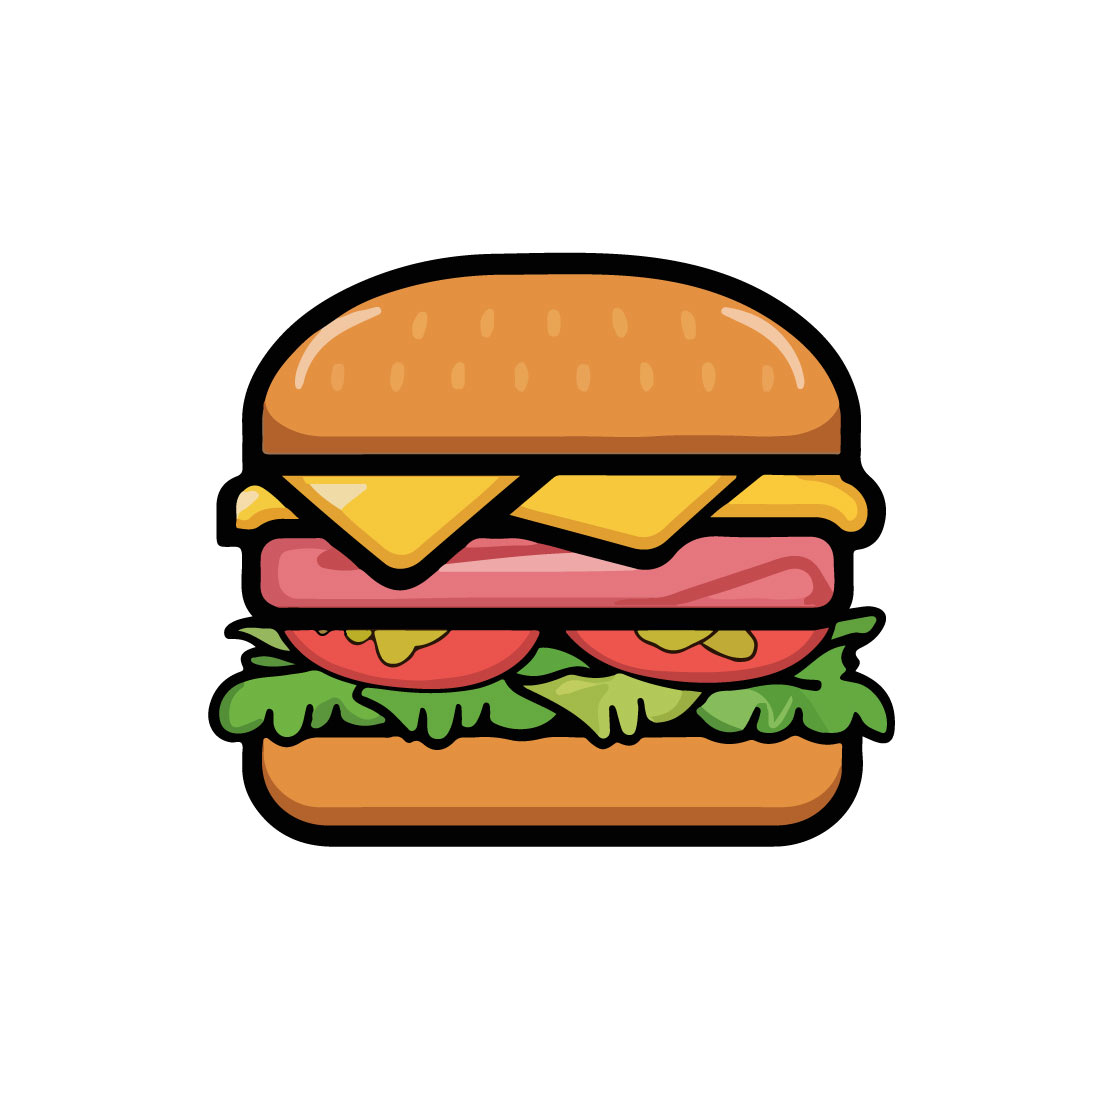 Burger icon flat colour cover image.